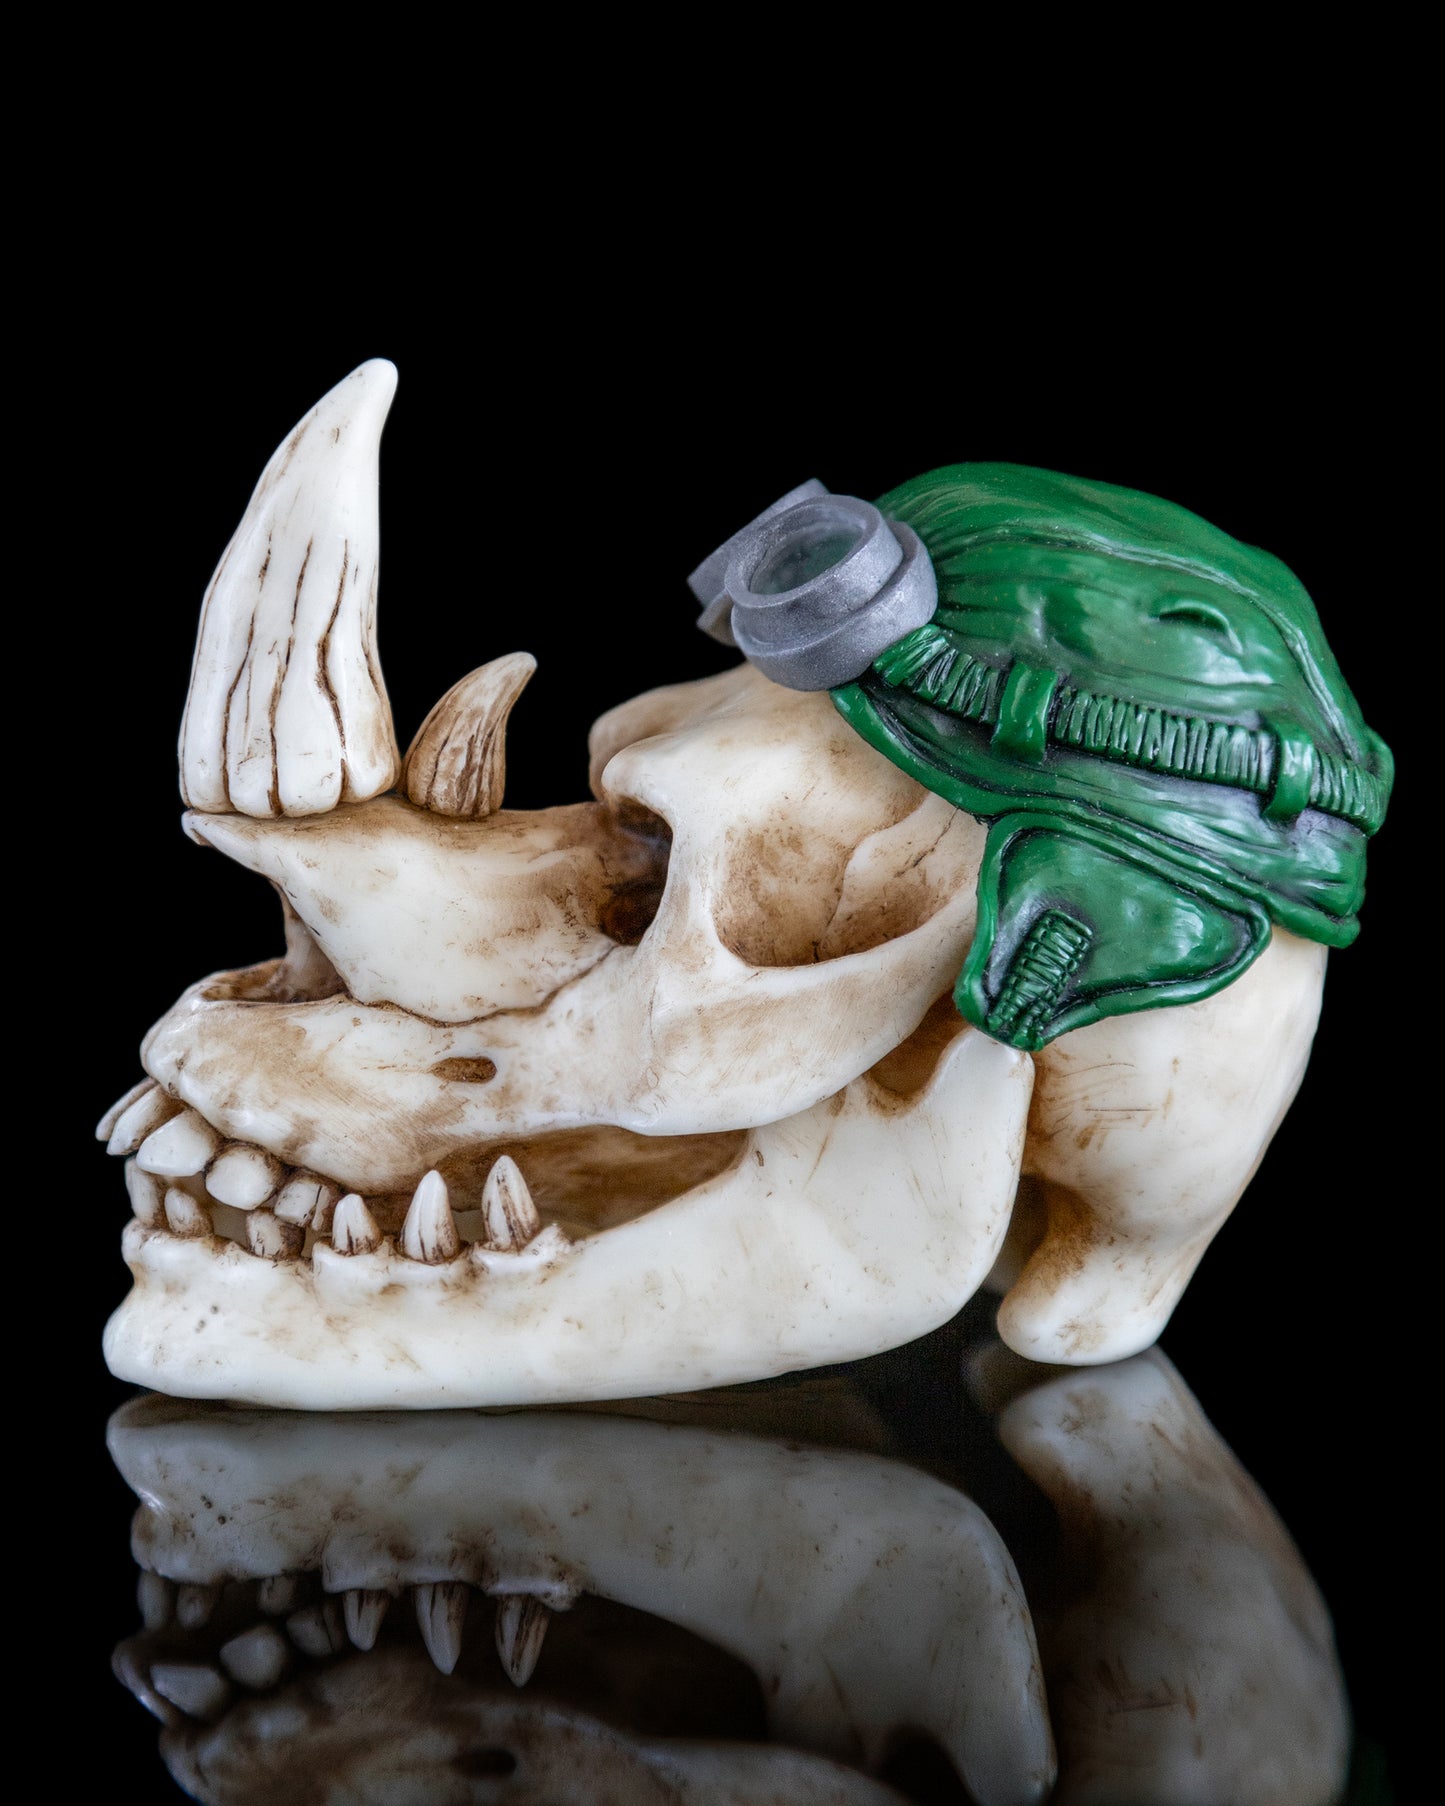 tmnt, teenage mutant ninja turtles, rhino rocksteady skull, fan art, collection, collector, handmade